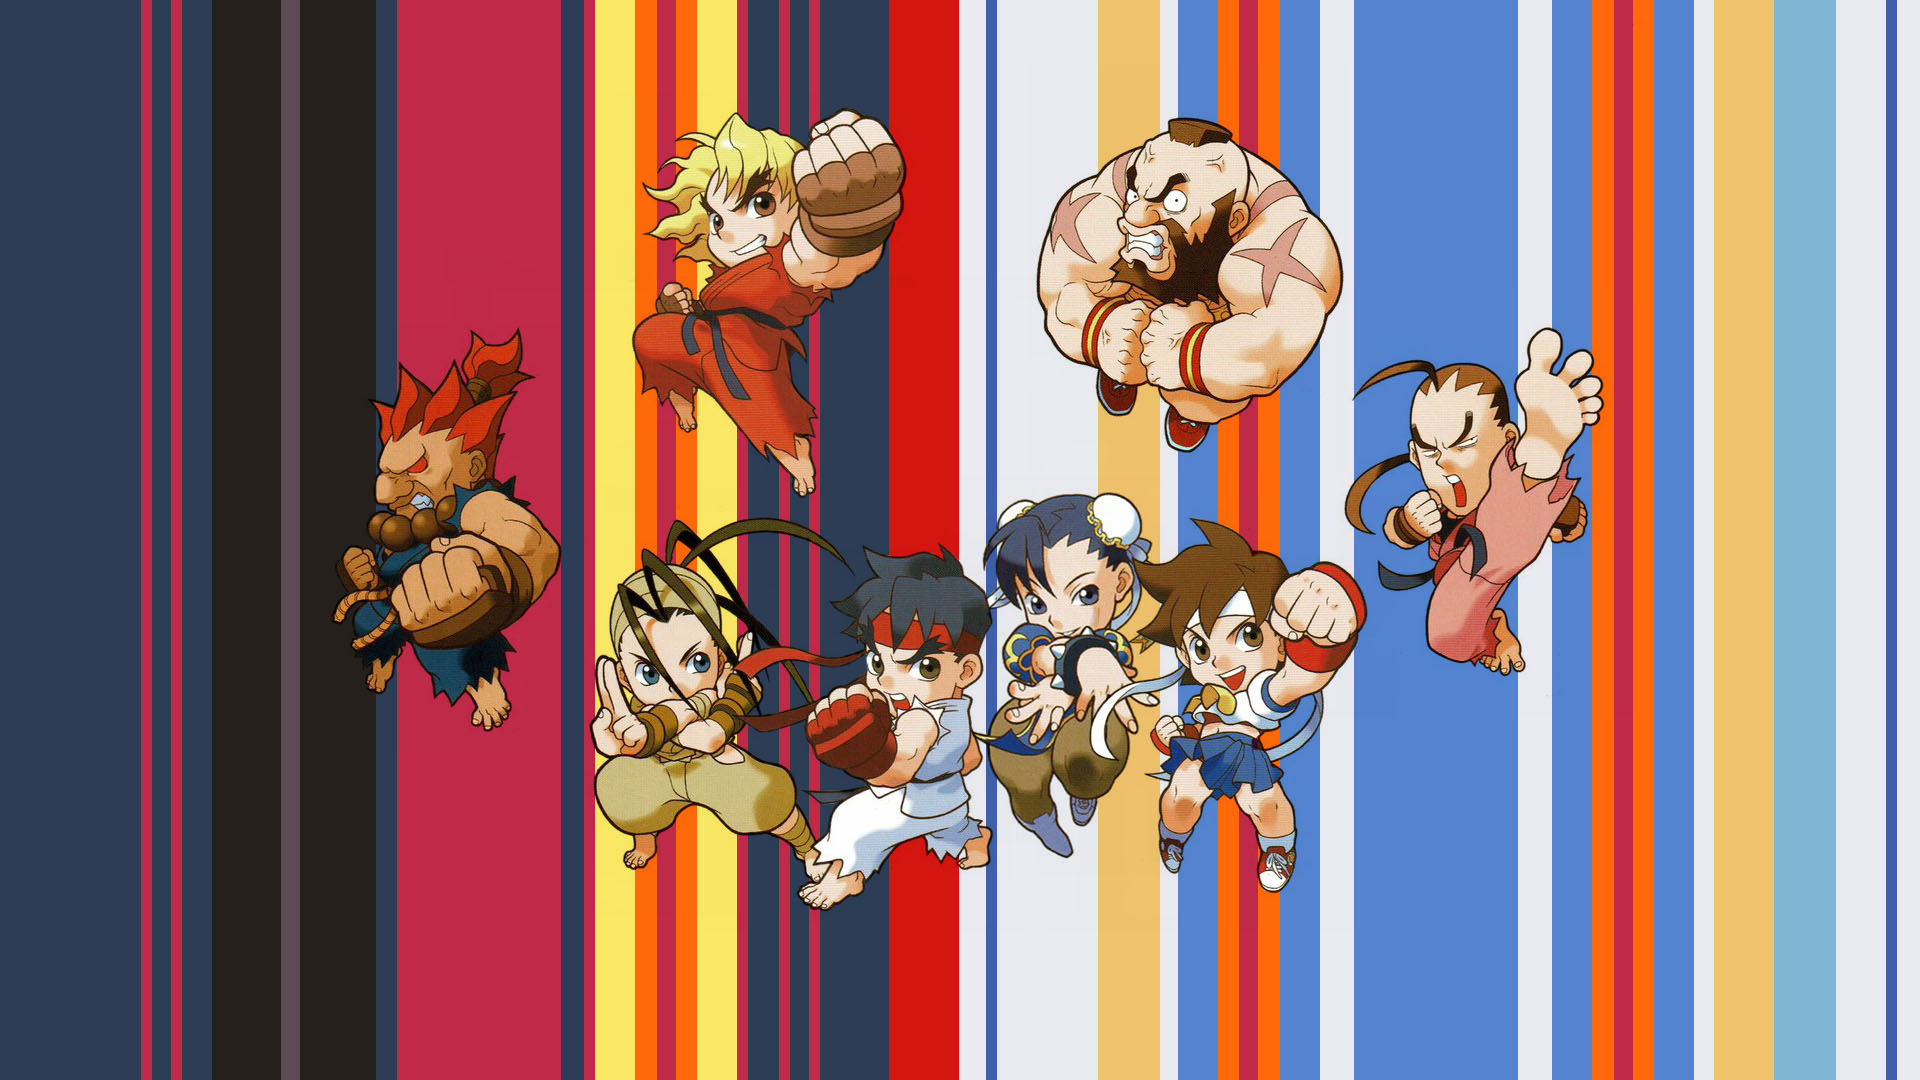 HD desktop wallpaper: Street Fighter, Video Game, Chun Li (Street Fighter)  download free picture #452090